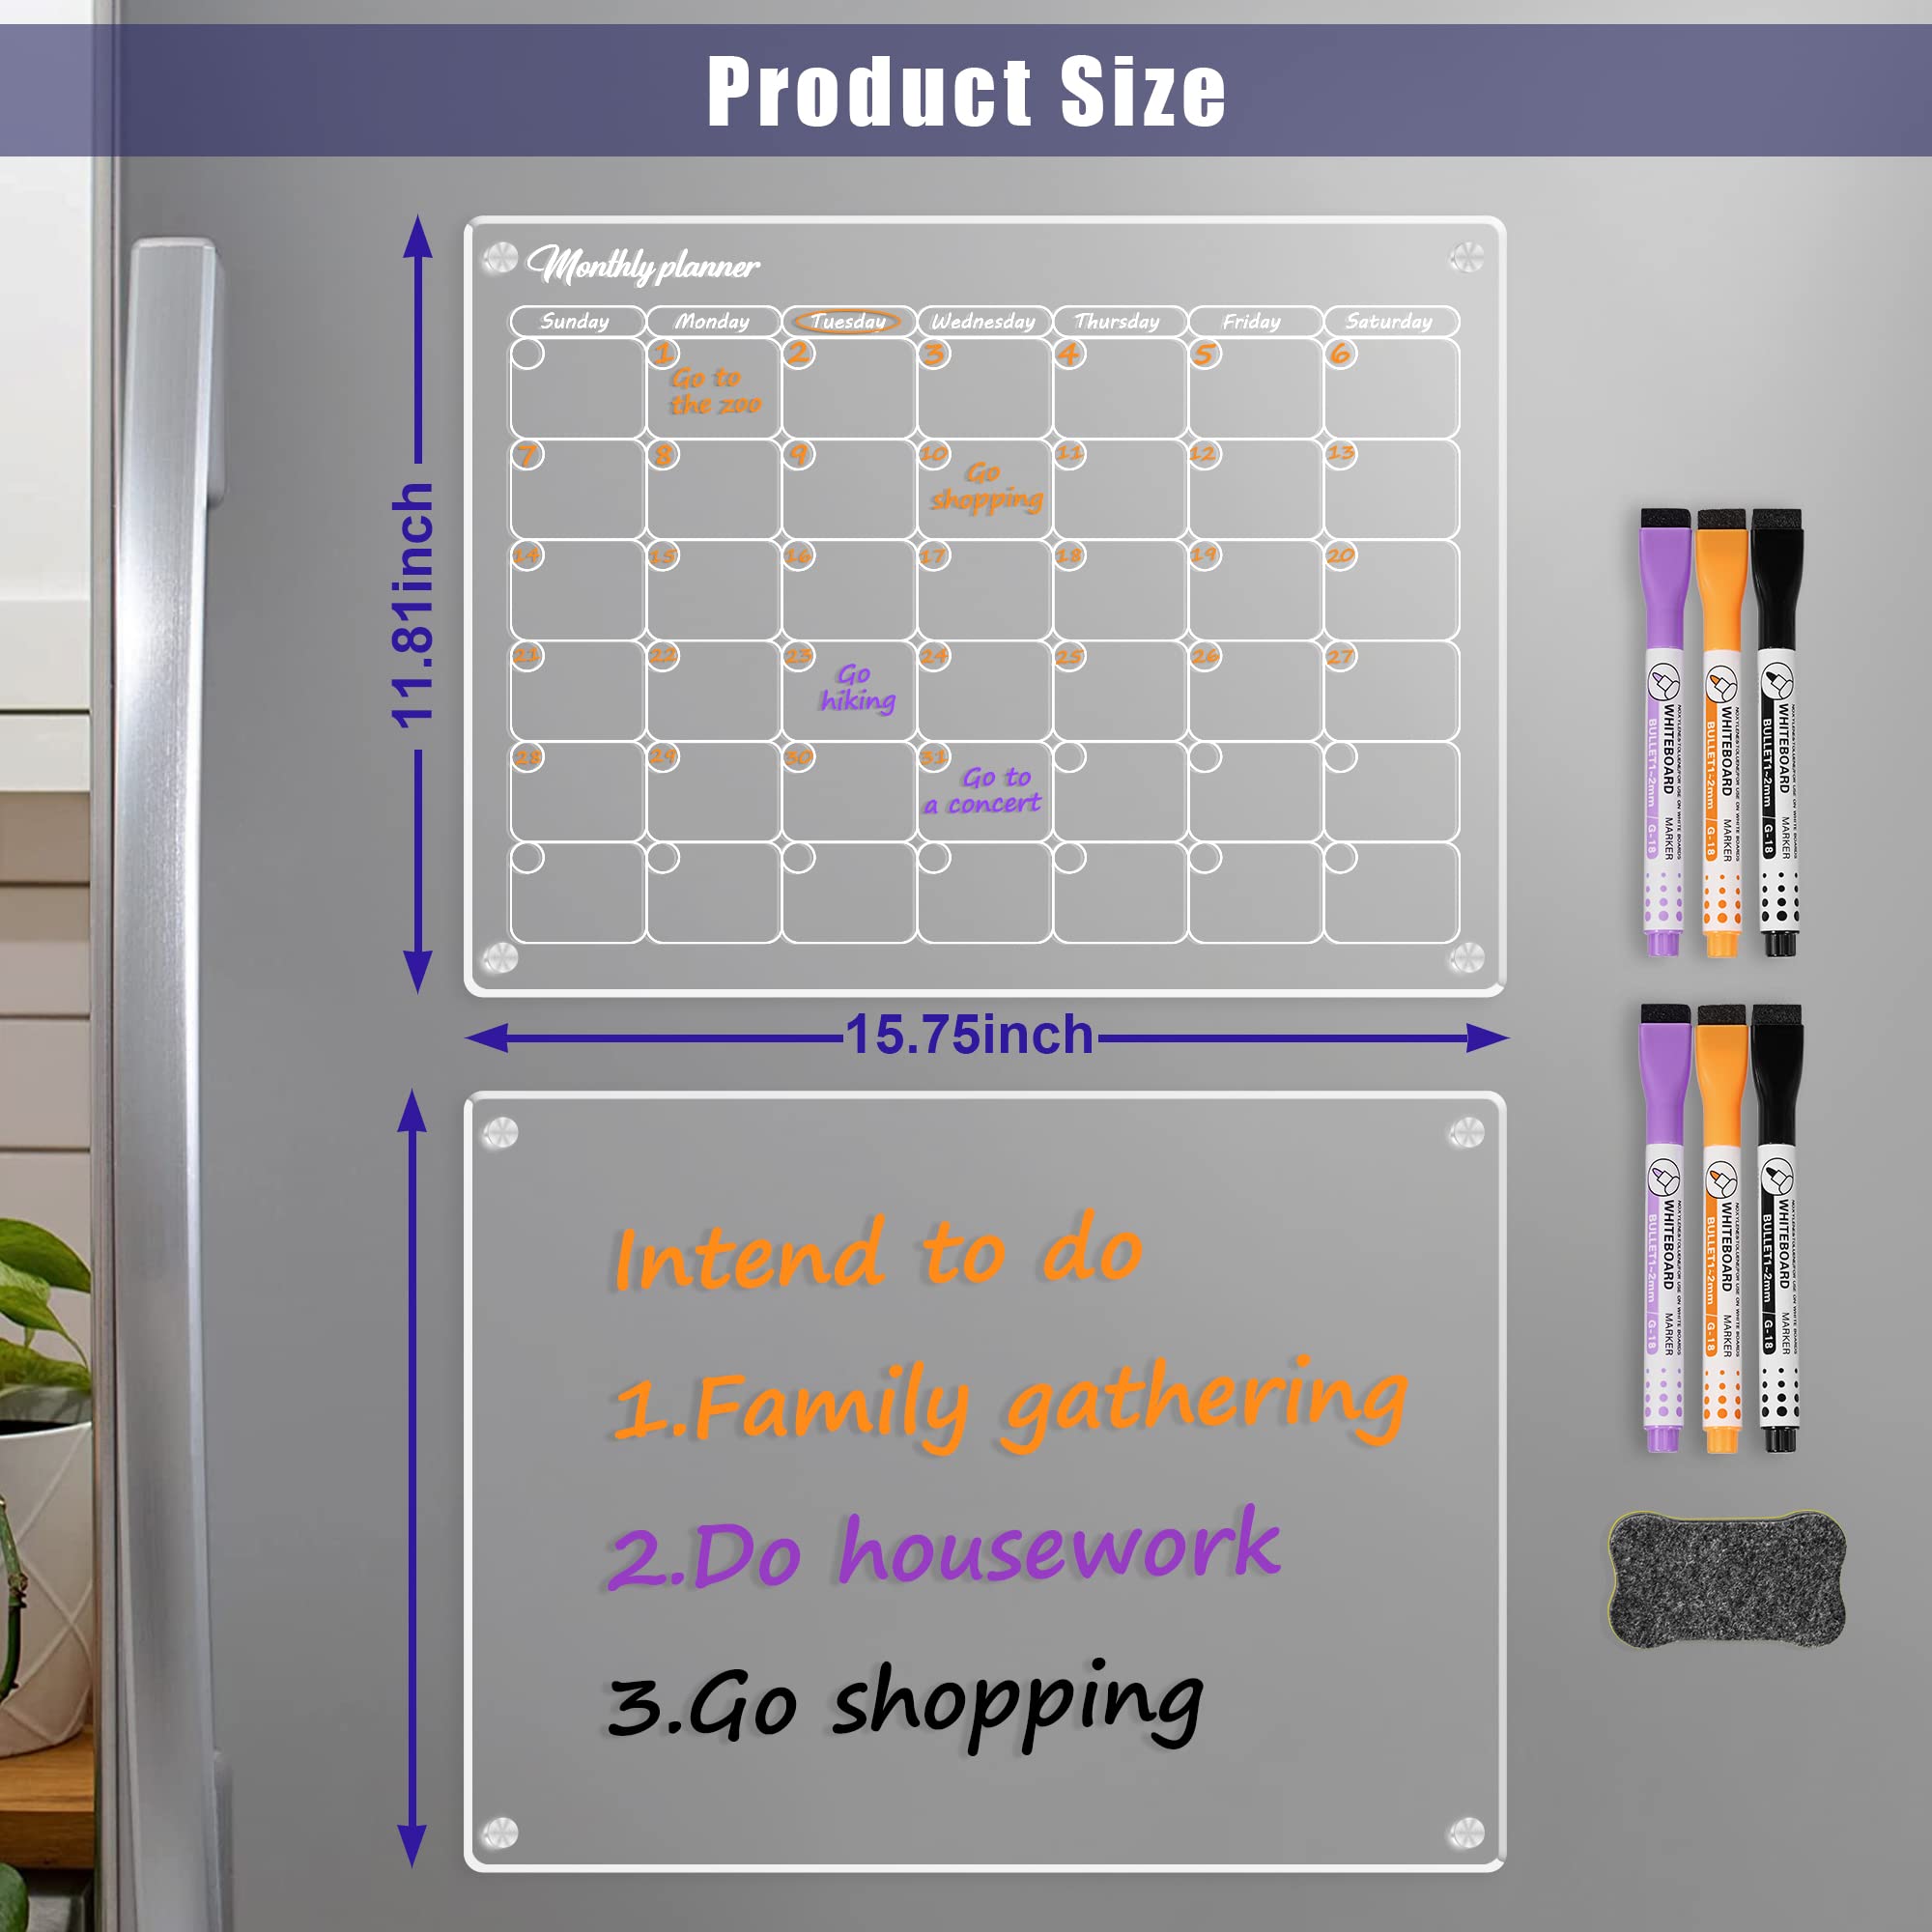 Myway Promotion Wholesale Custom Acrylic Board Magnetic Dry Erase Board Calendar Planner Schedule for Fridge